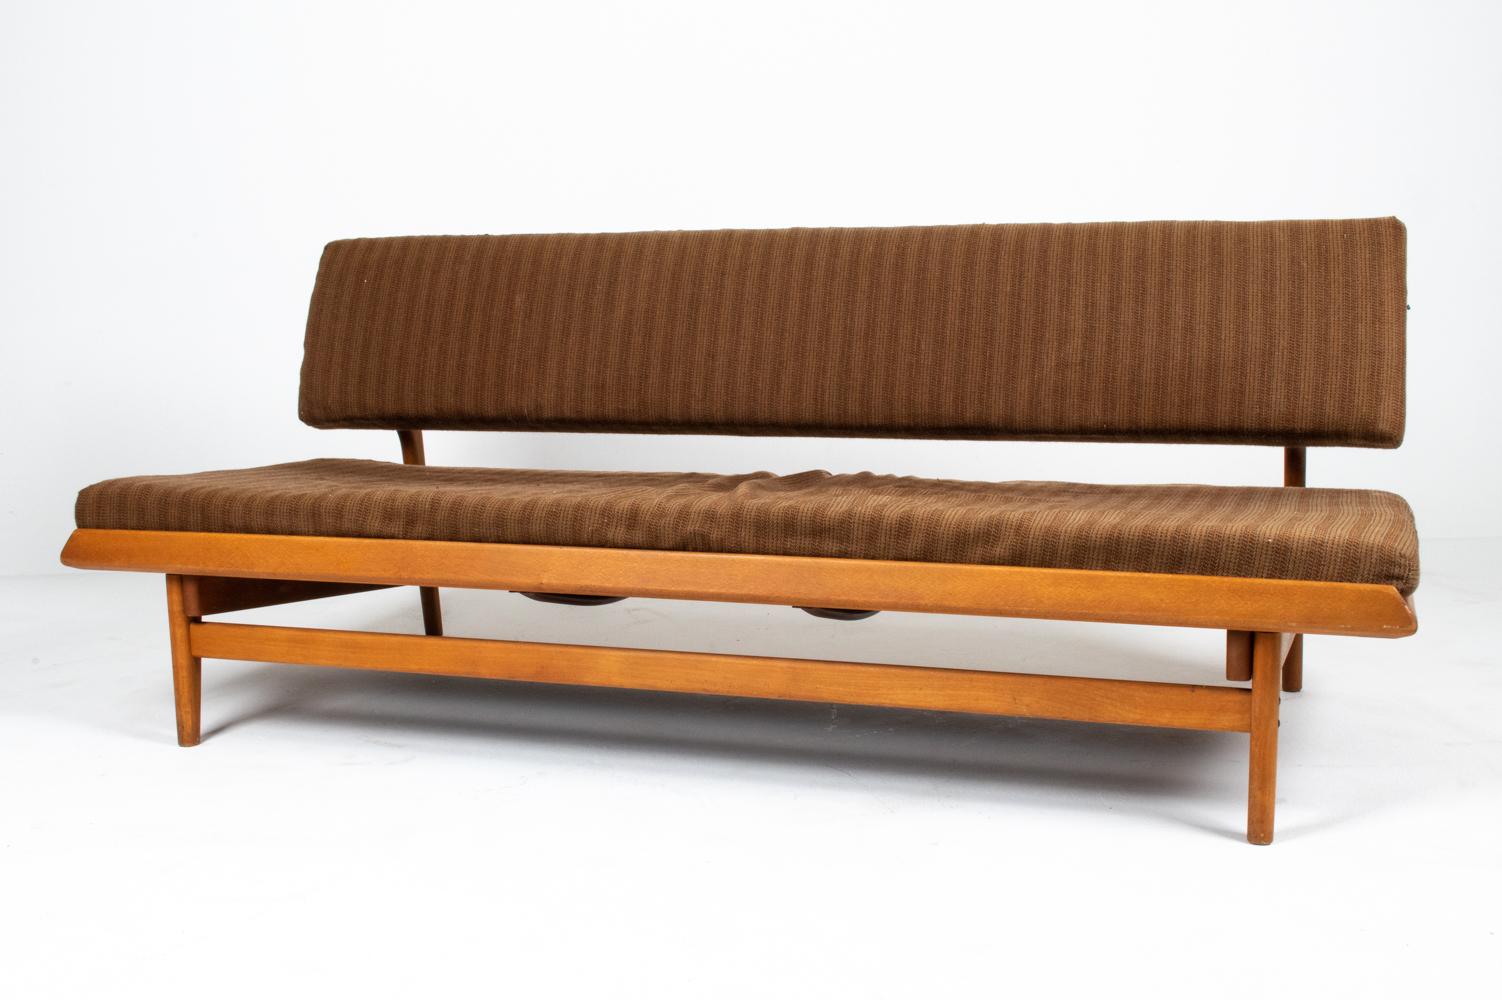 Karl Erik Ekselius für JOC Vetlanda Umwandelbares Sofa / Tagesbett, 1960er Jahre (Skandinavische Moderne) im Angebot